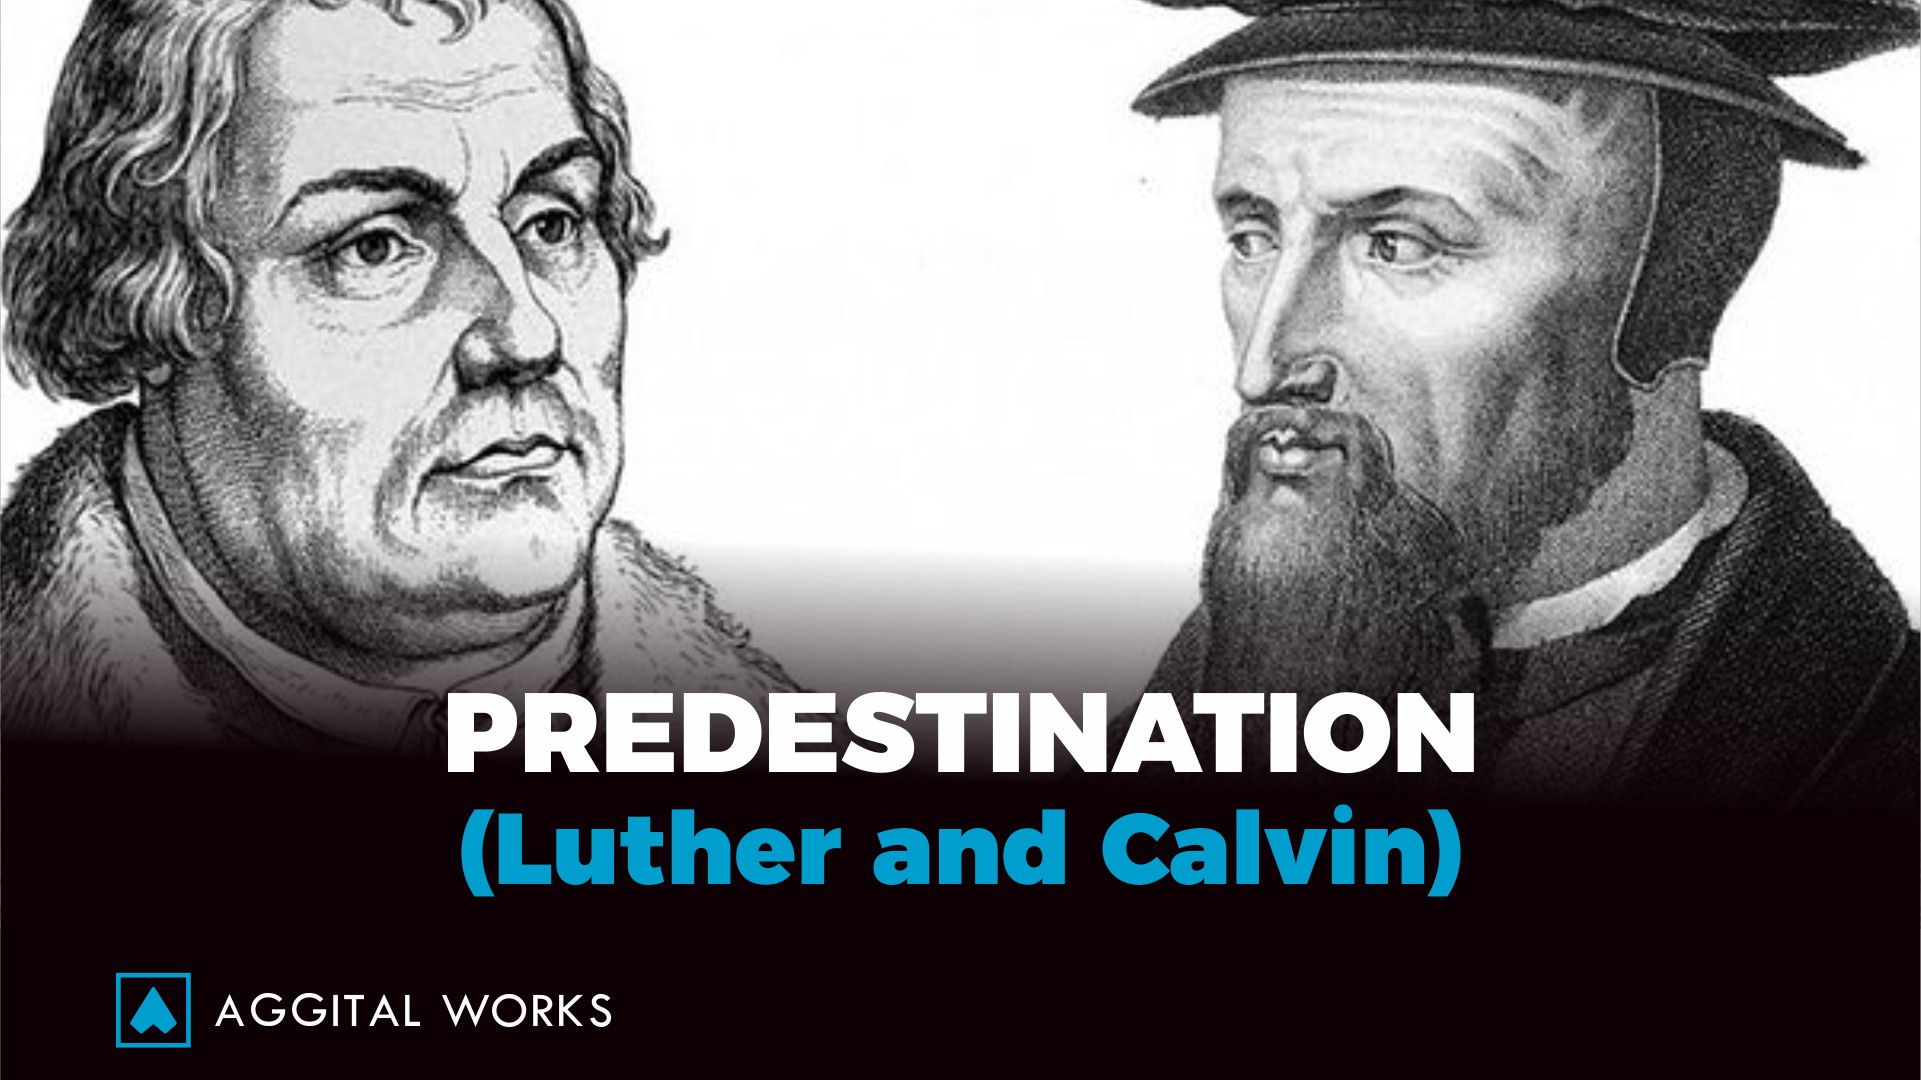 luther an calvin on predestination